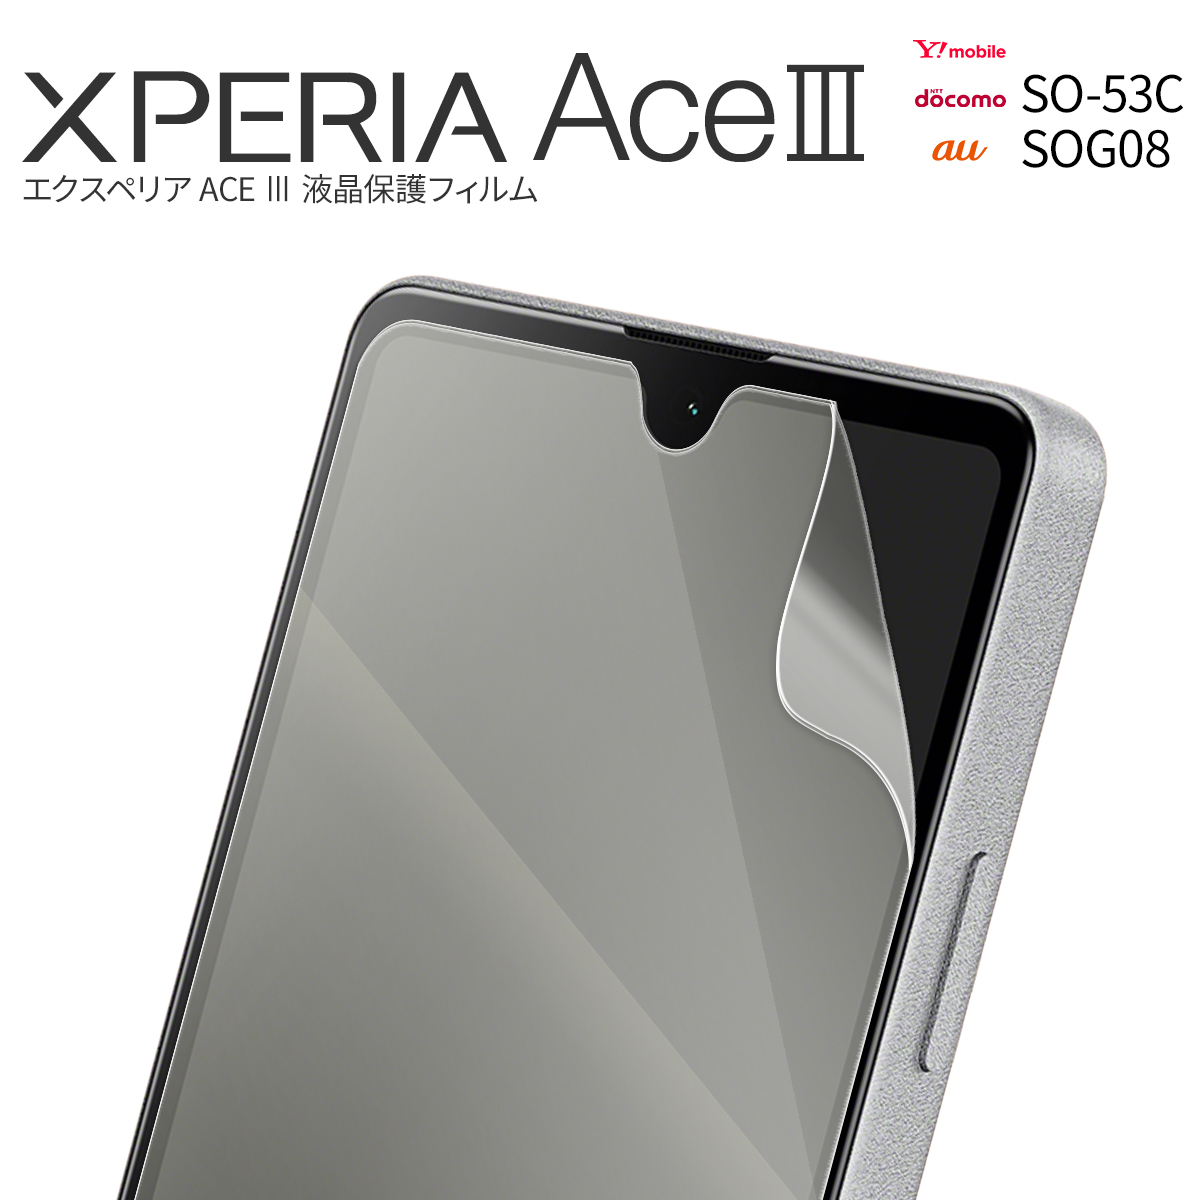 Xperia Ace III フィルム 保護フィルム スマホフィルム キズ防止 人気